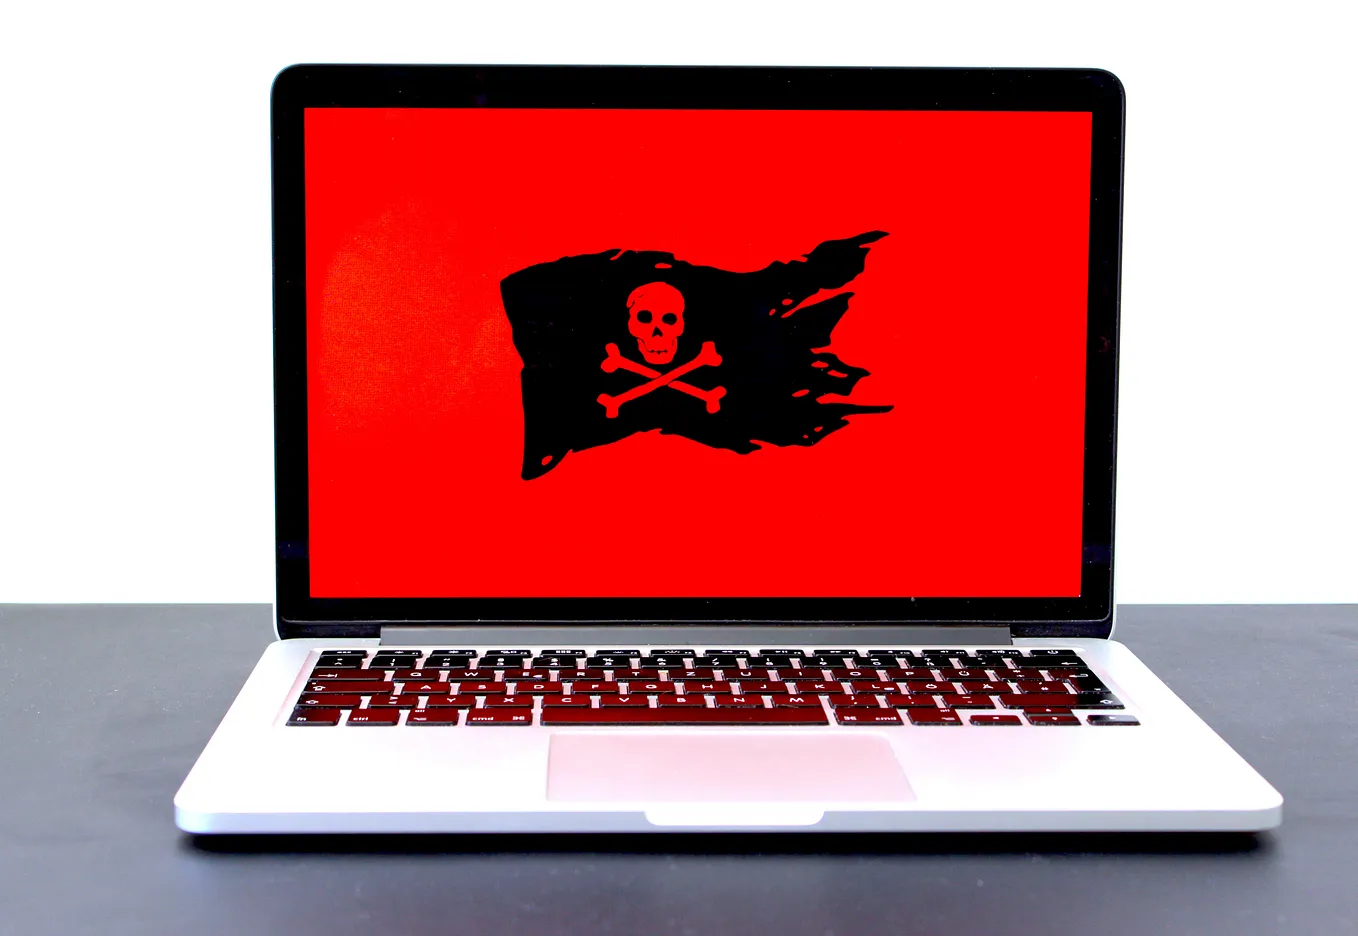 MacOS users beware! AMOS Trojan